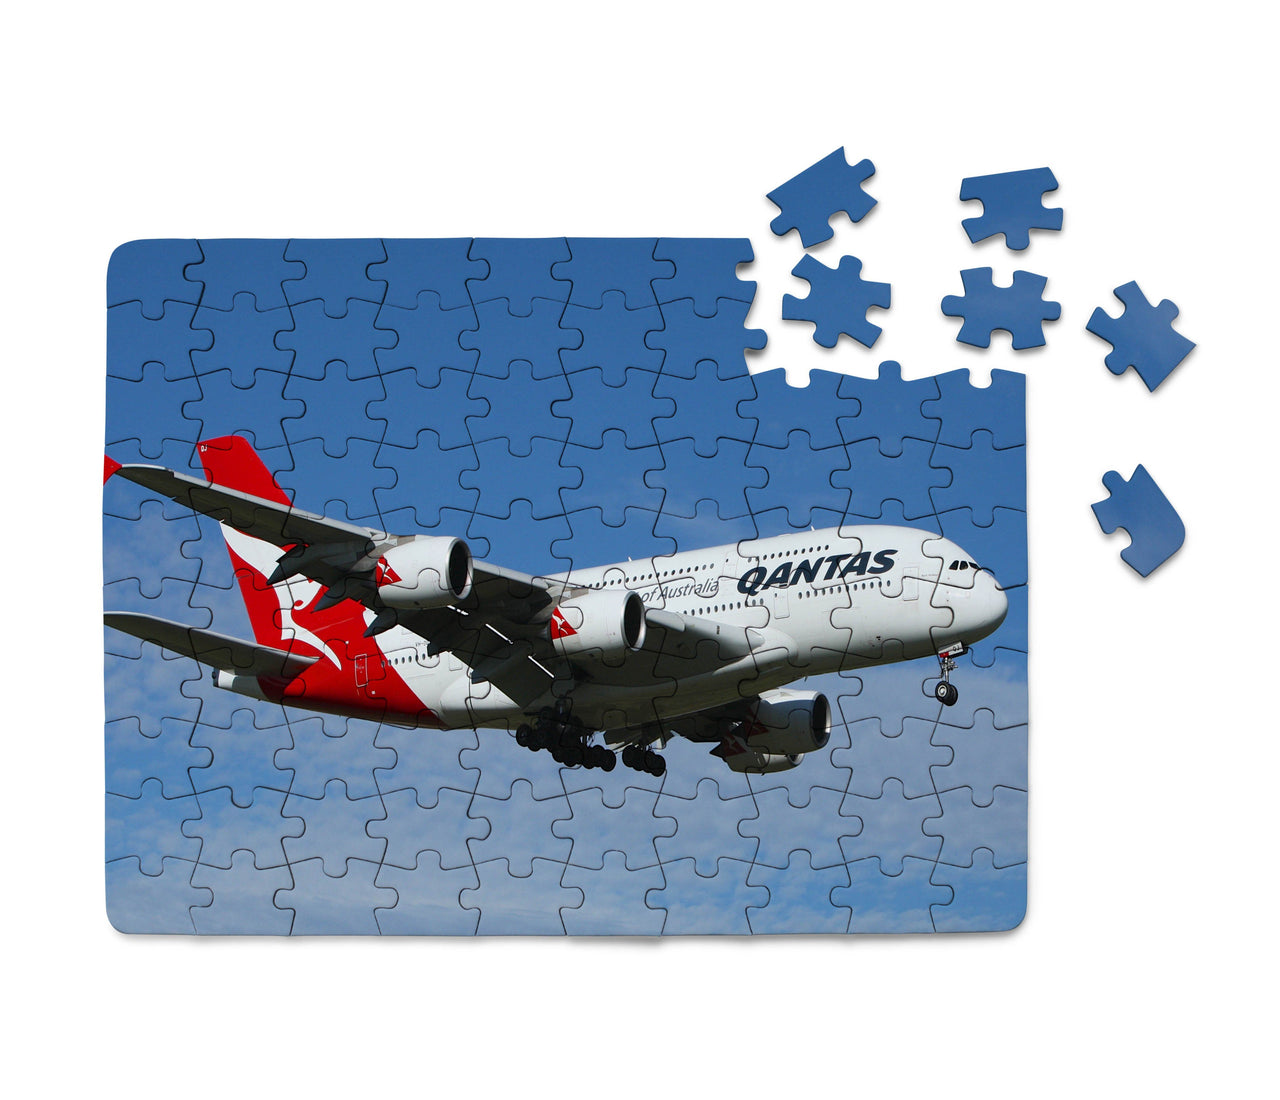 Landing Qantas A380 Printed Puzzles Aviation Shop 